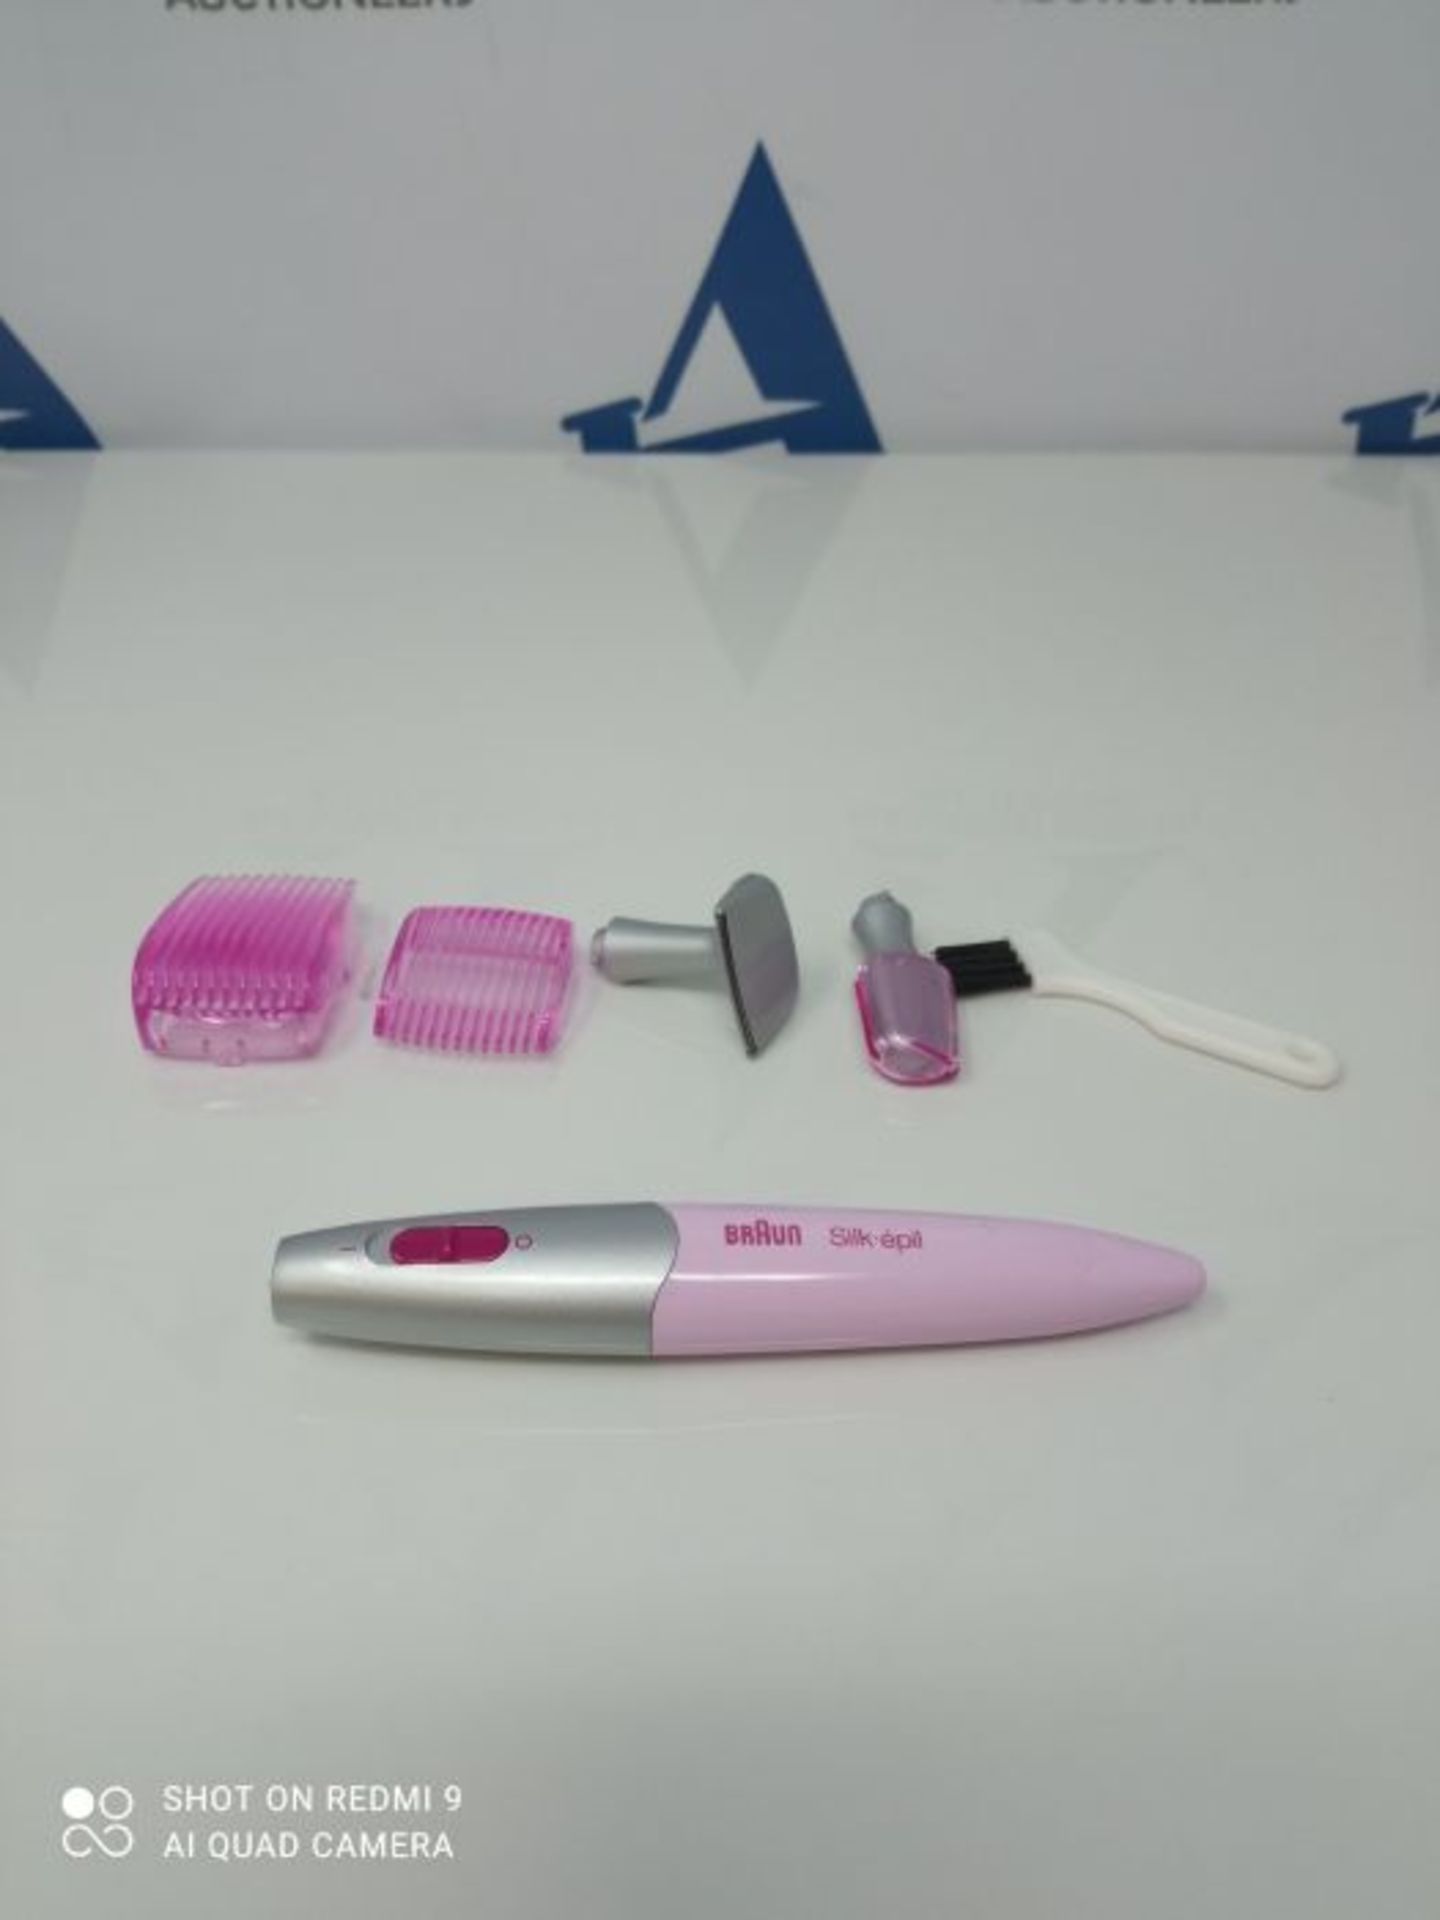 Braun Silk-épil FG1100 Precision Trimmer for Bikini and Eyebrow Pink - Image 2 of 2